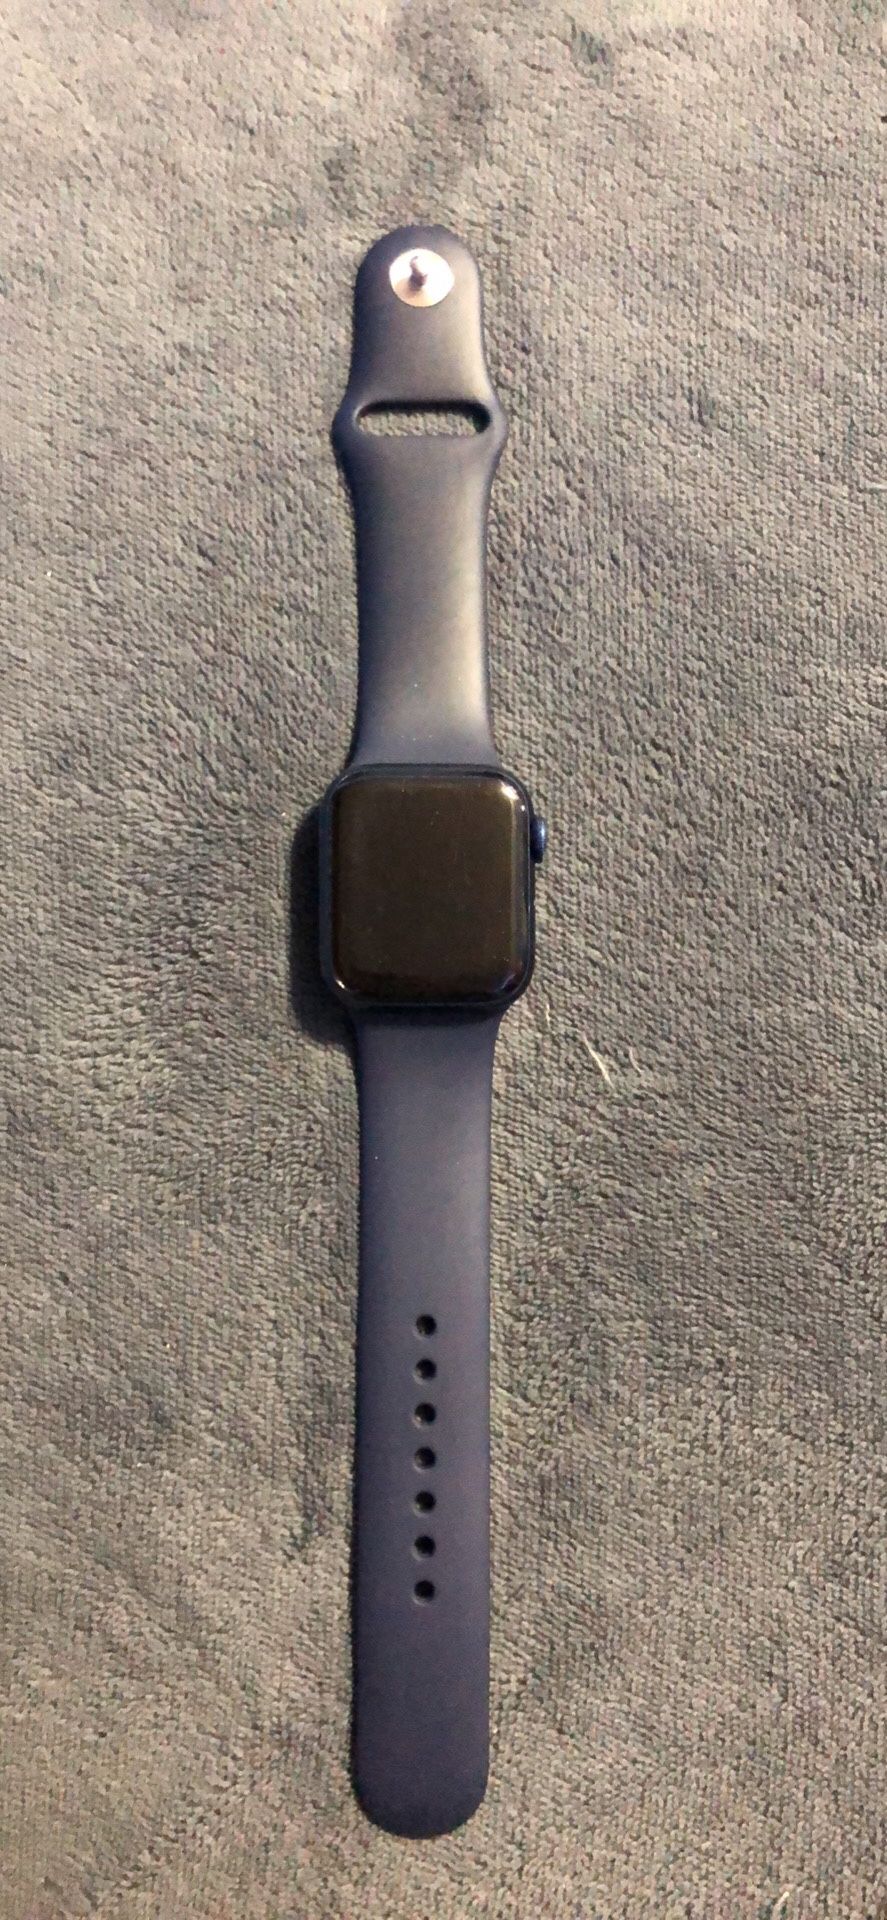 Series 6 Apple Watch